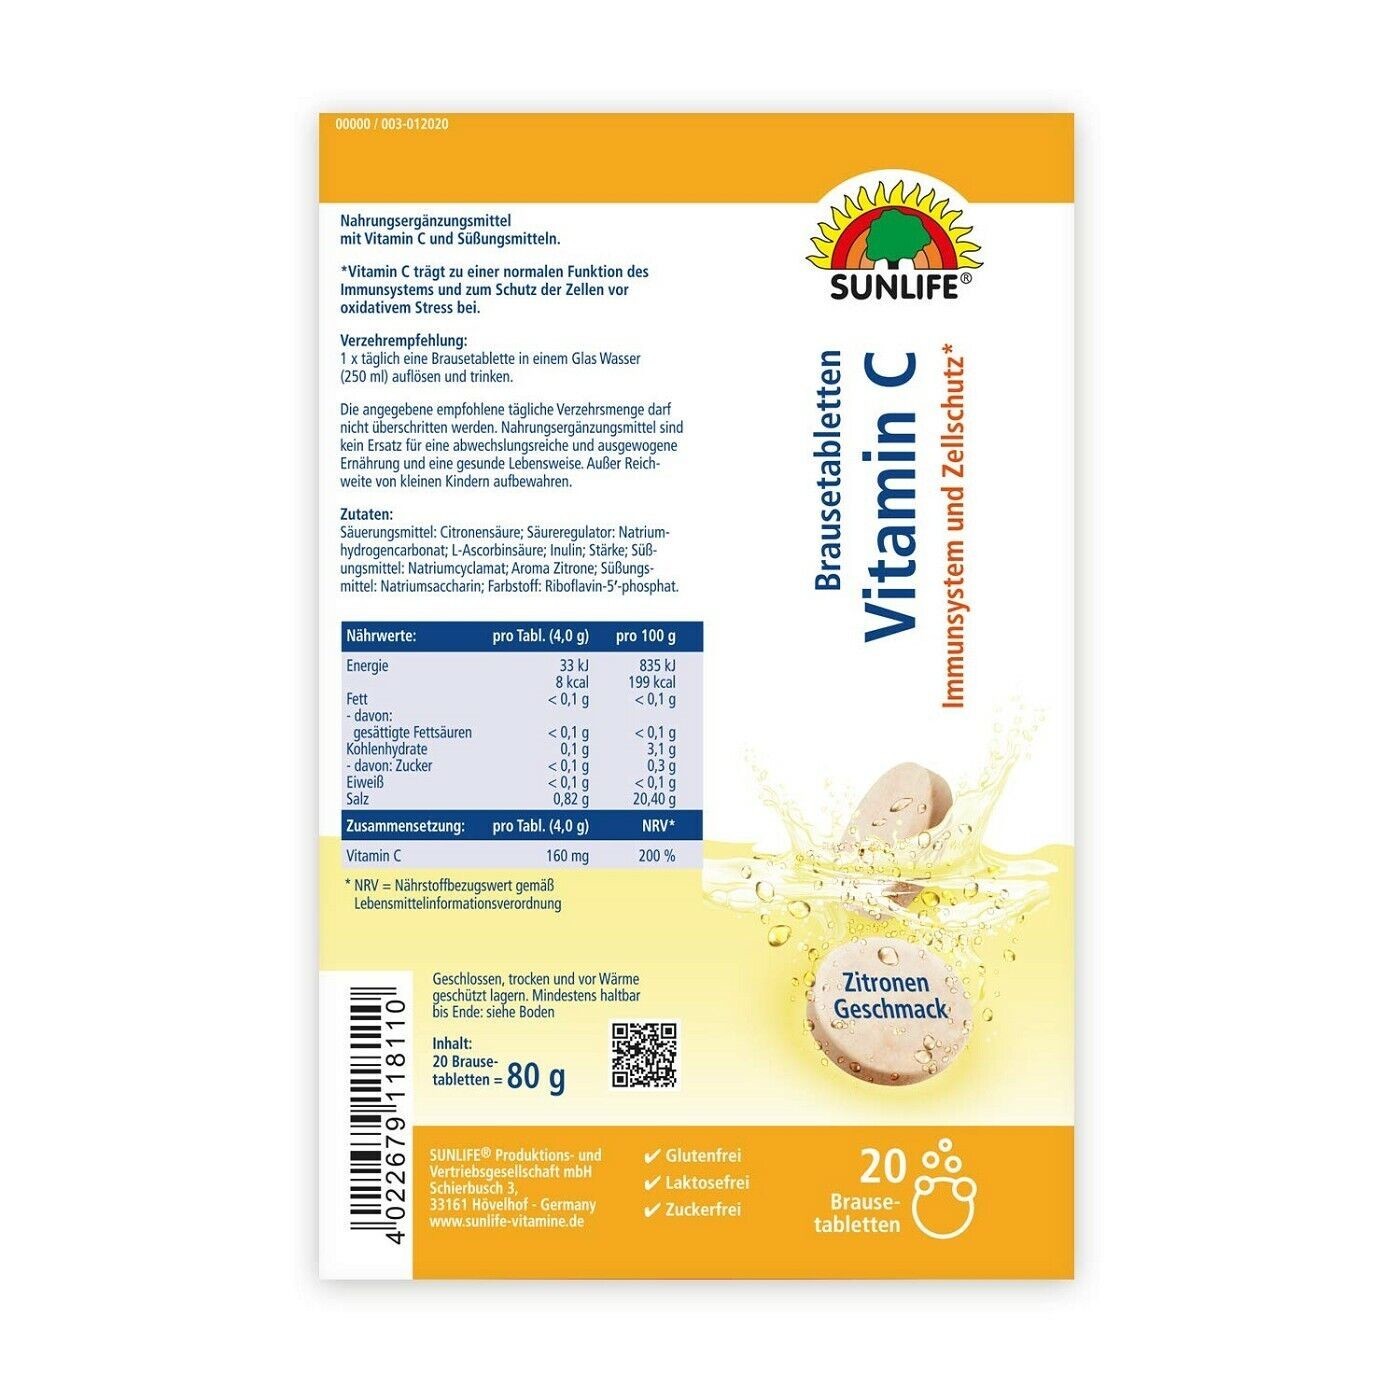 Sunlife Vitamin C Brausetabletten 6x20 Stück 6er-Pack Bundle